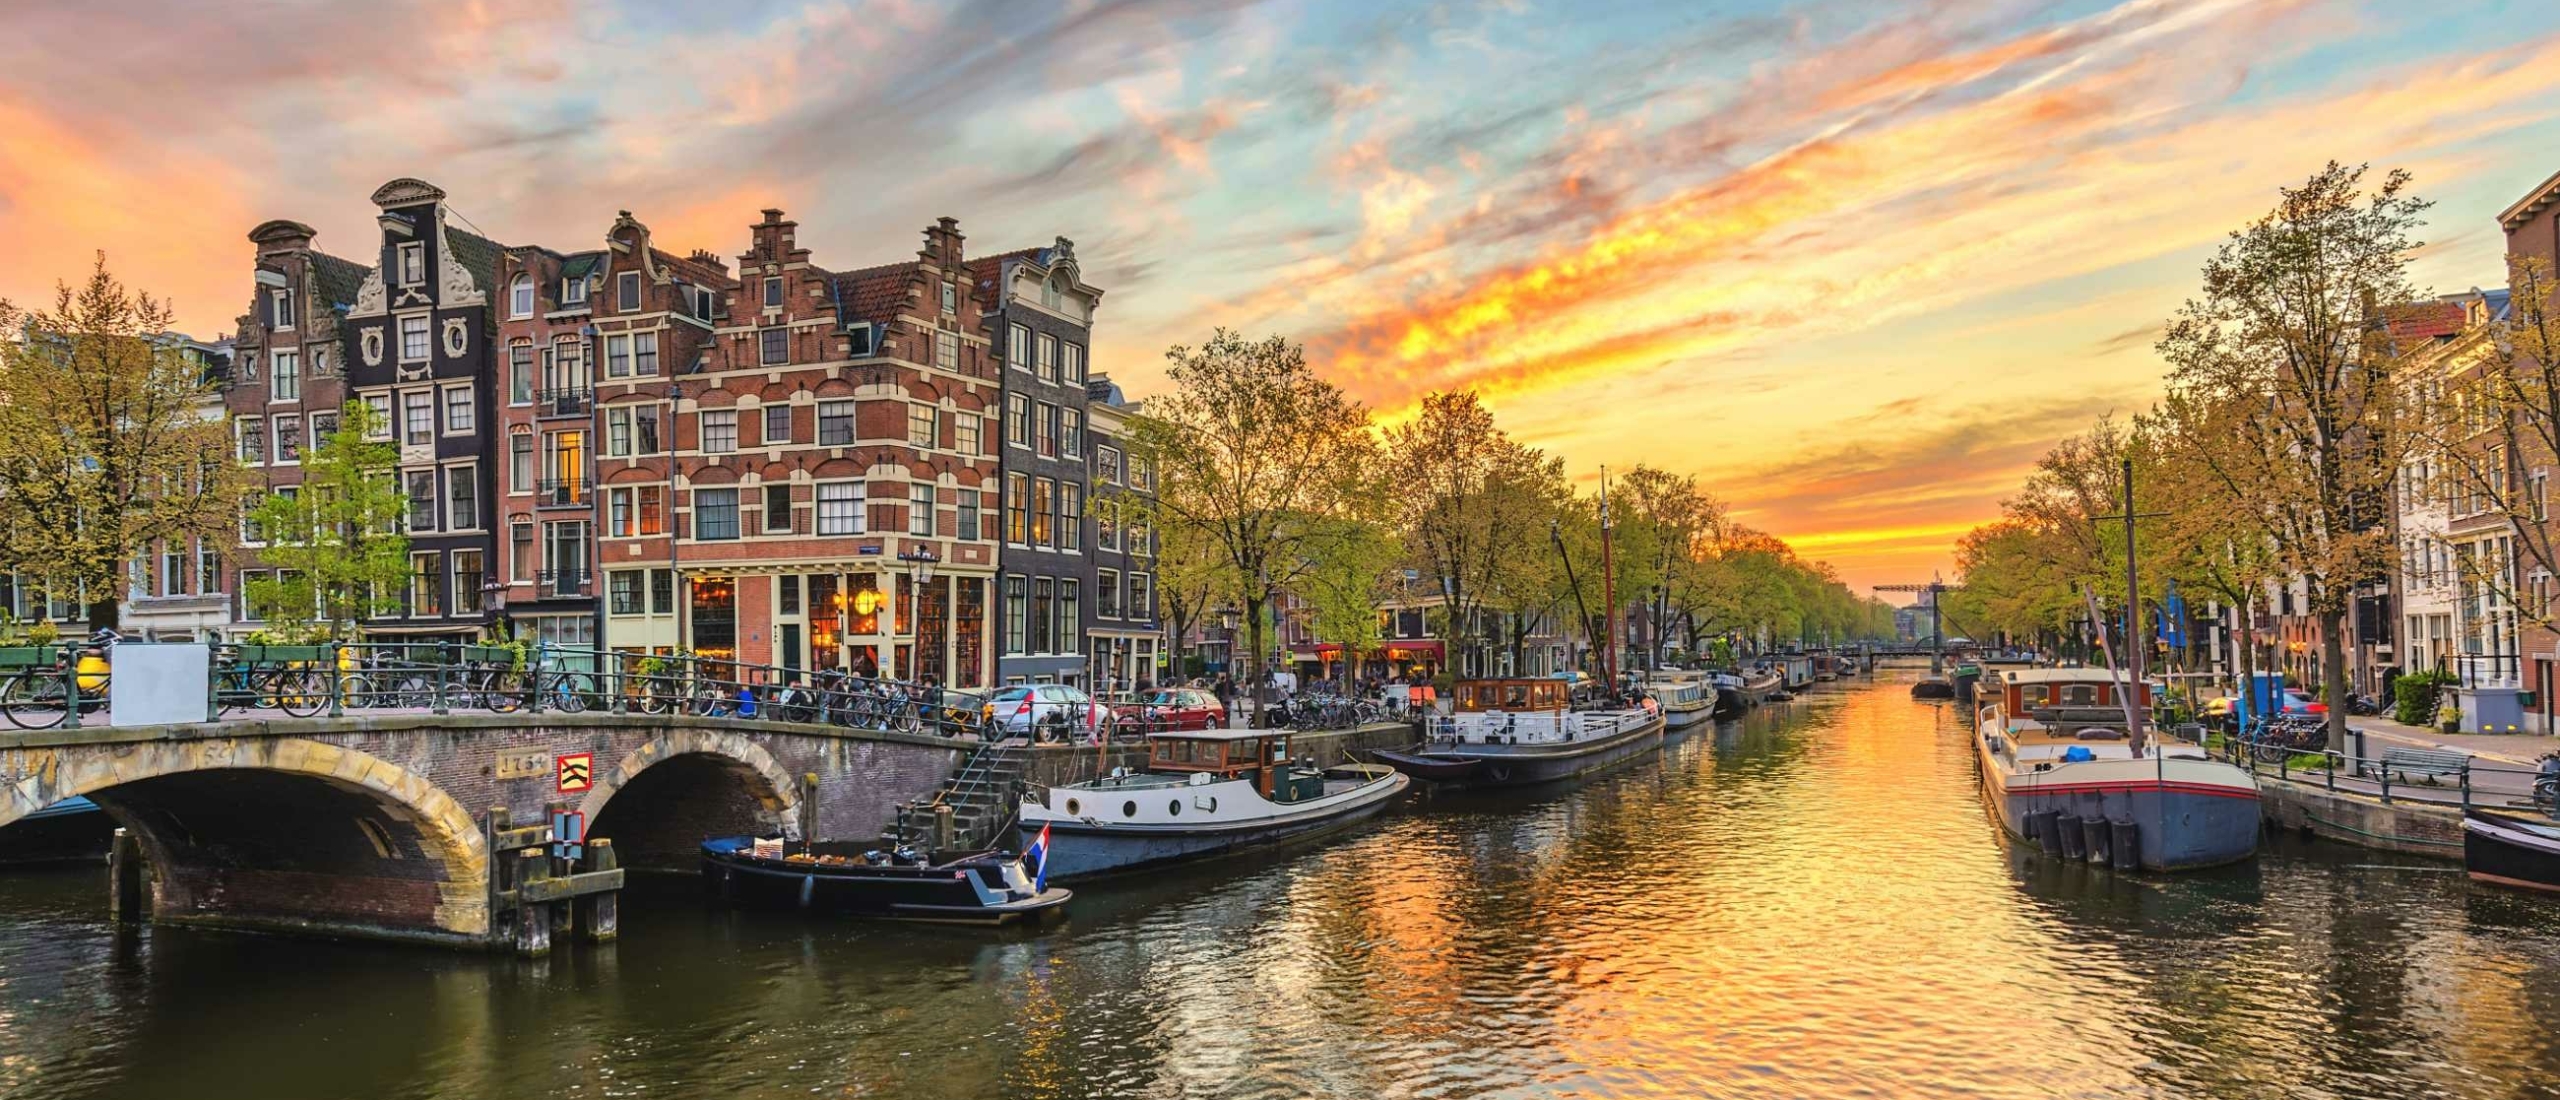 CityGuide: de leukste adresjes in Amsterdam-West